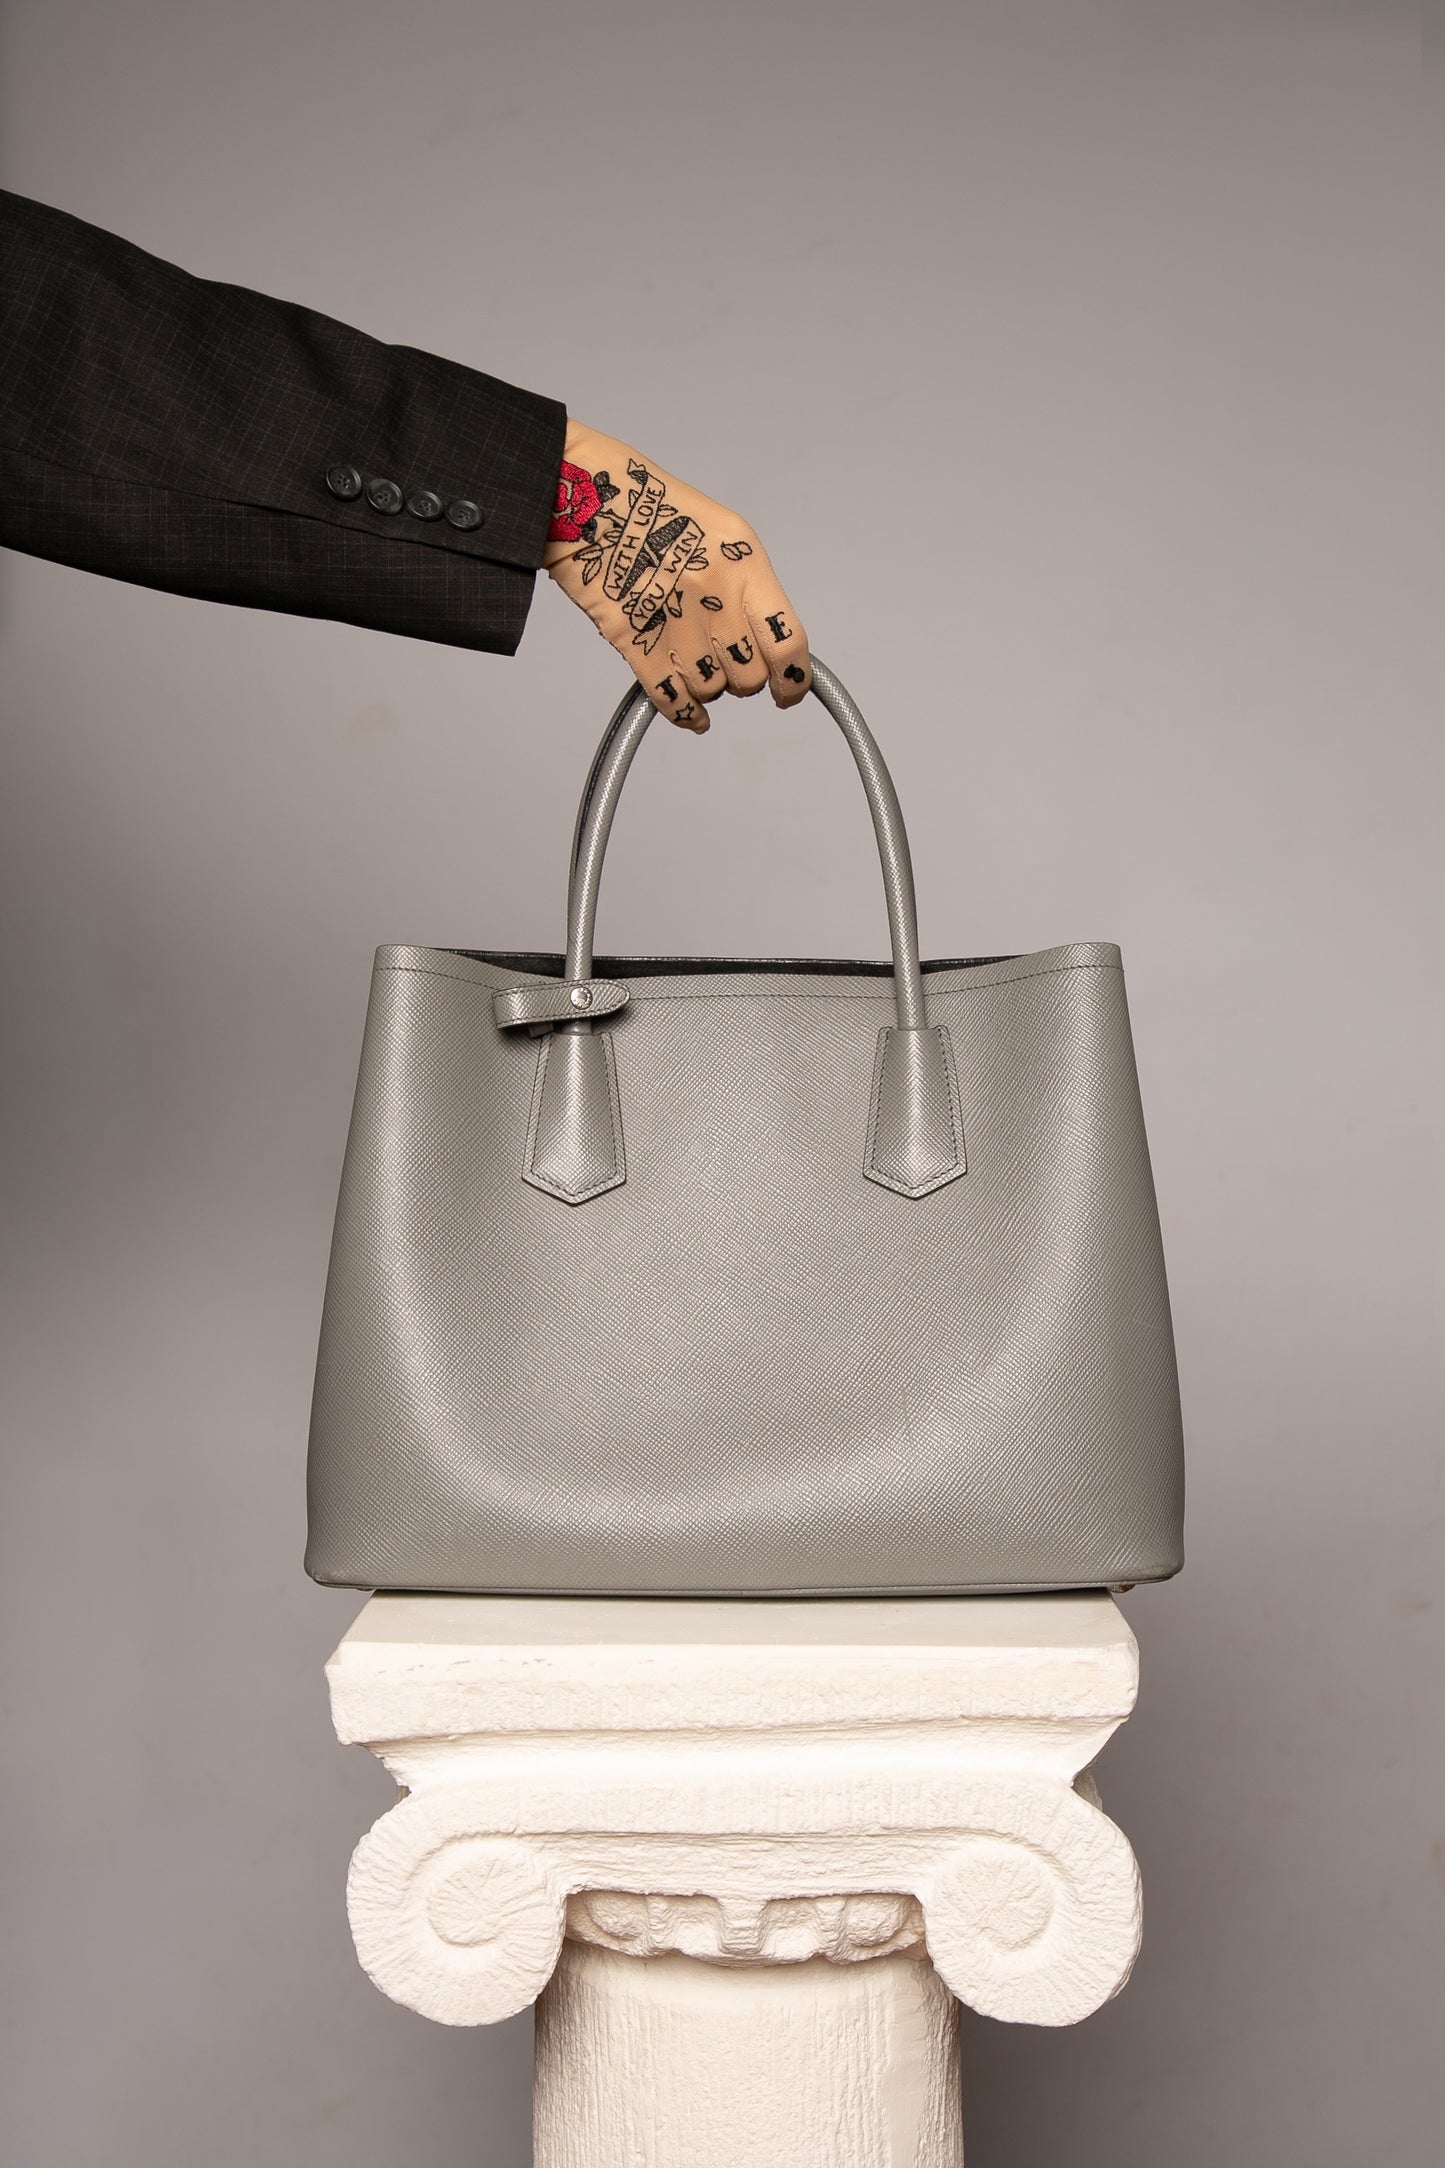 Prada Saffiano Cuir Double Medium Tote Bag - Oh So Glam